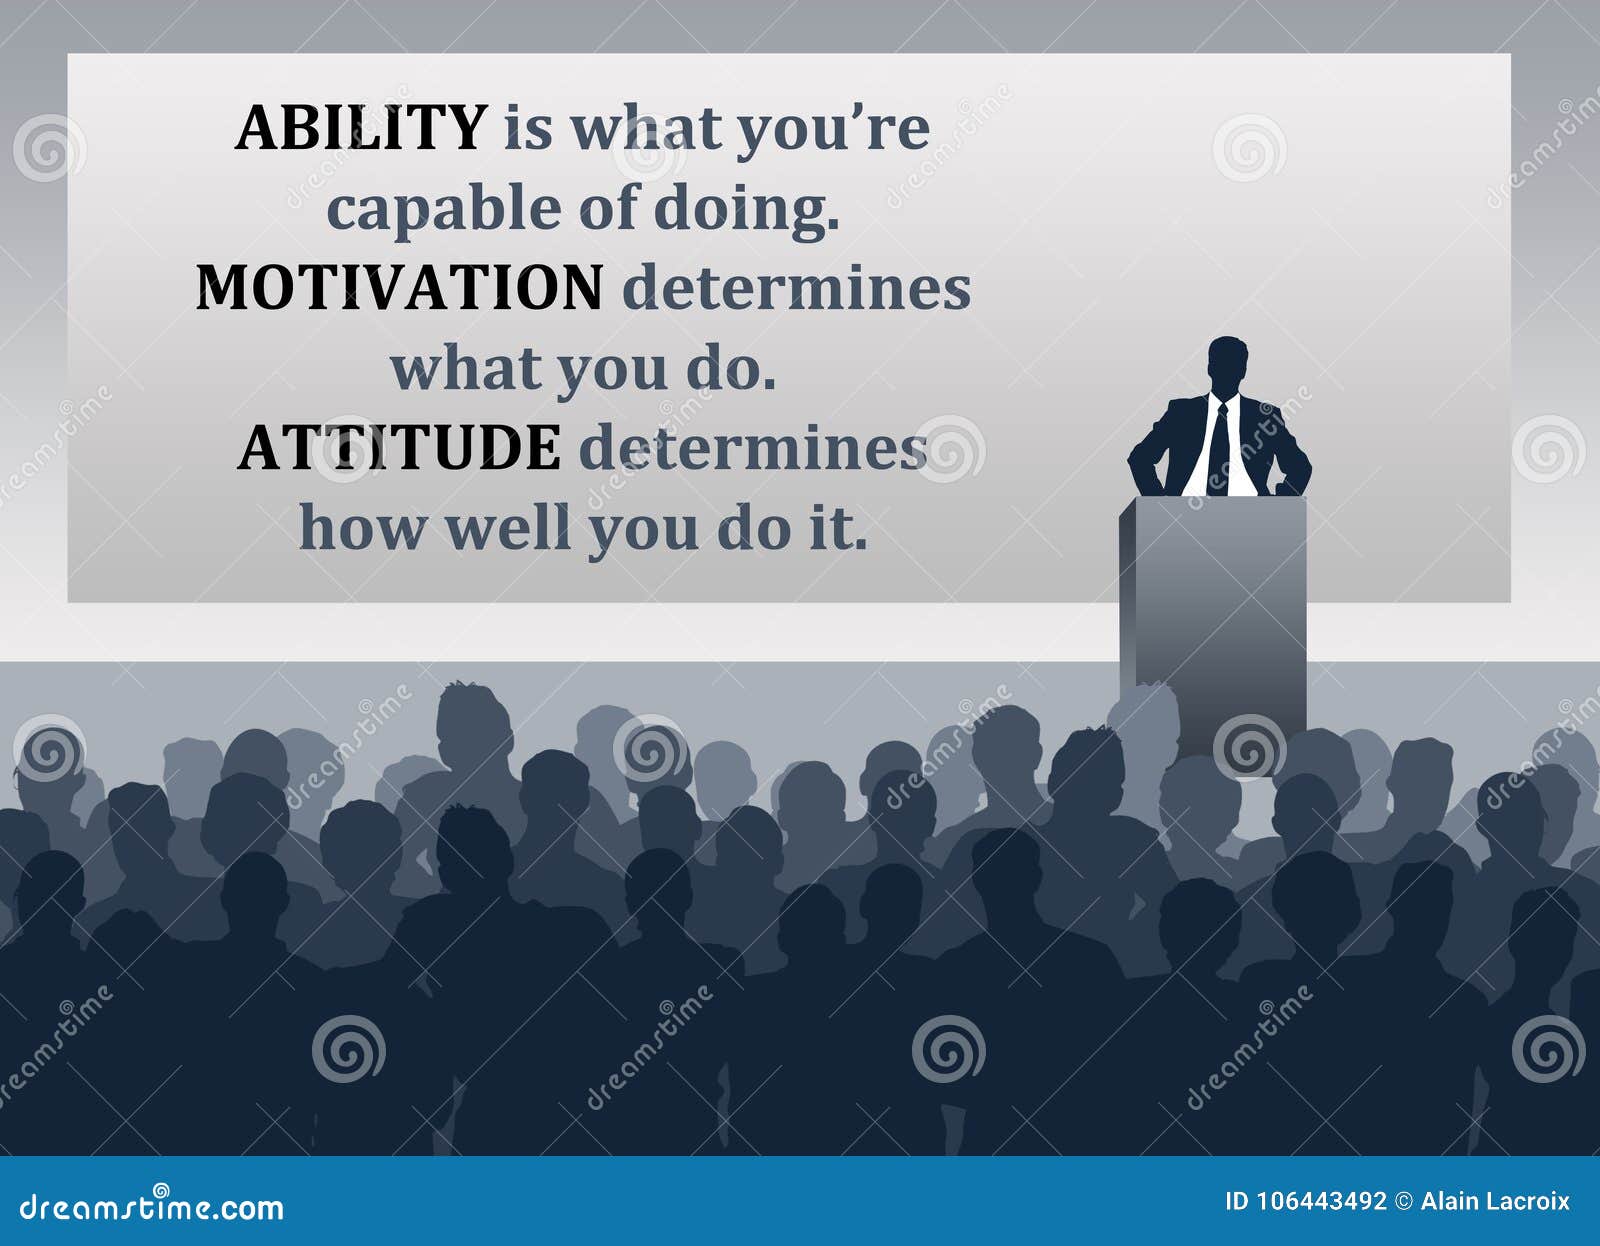 ability motivation attitude